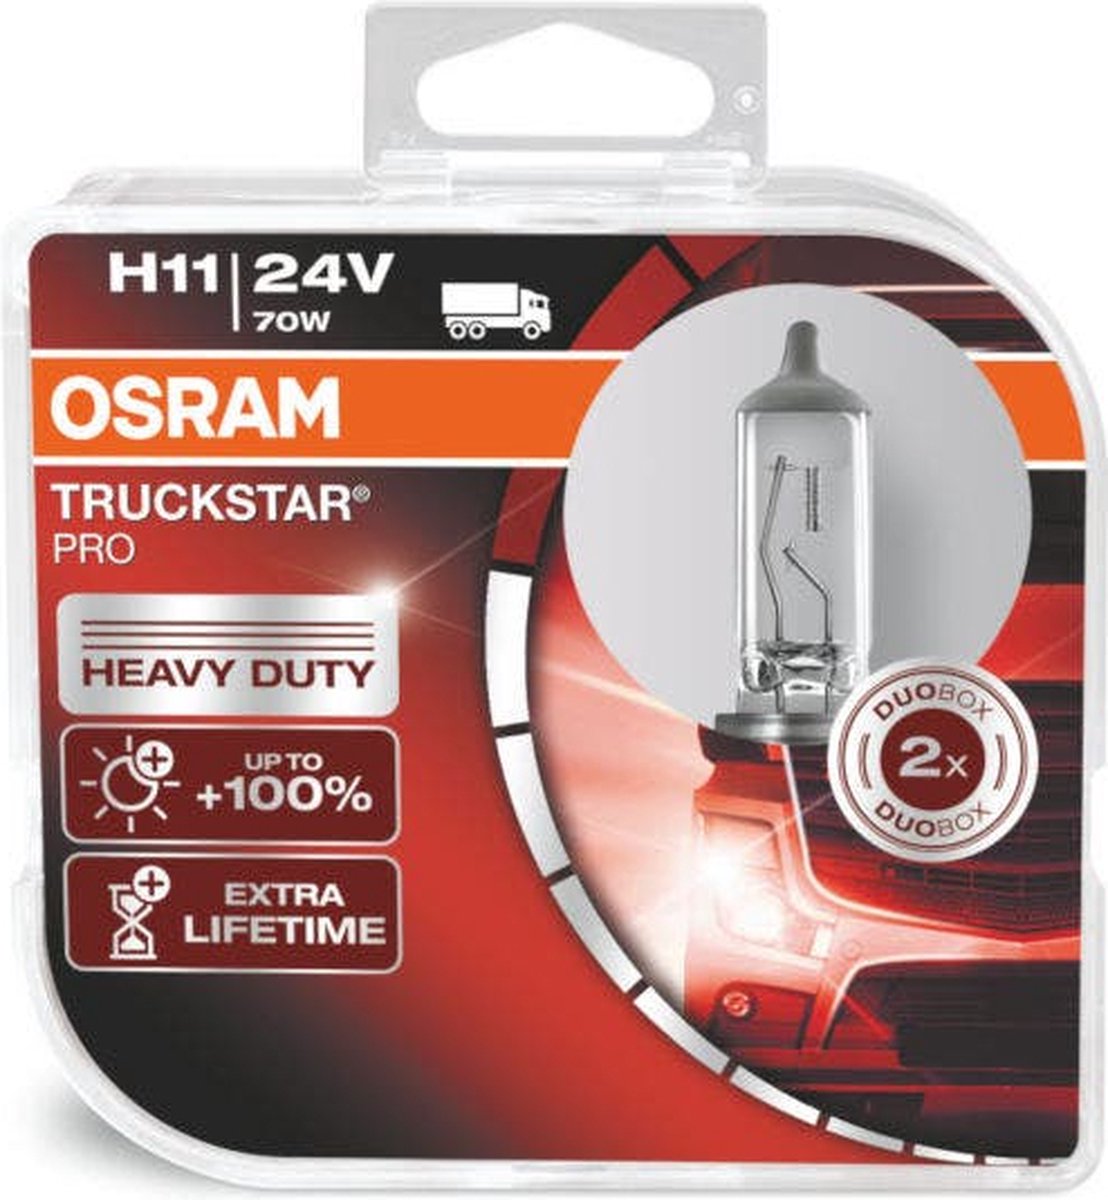 Osram Truckstar Pro H11 24v 70w 64216TSP-HCB